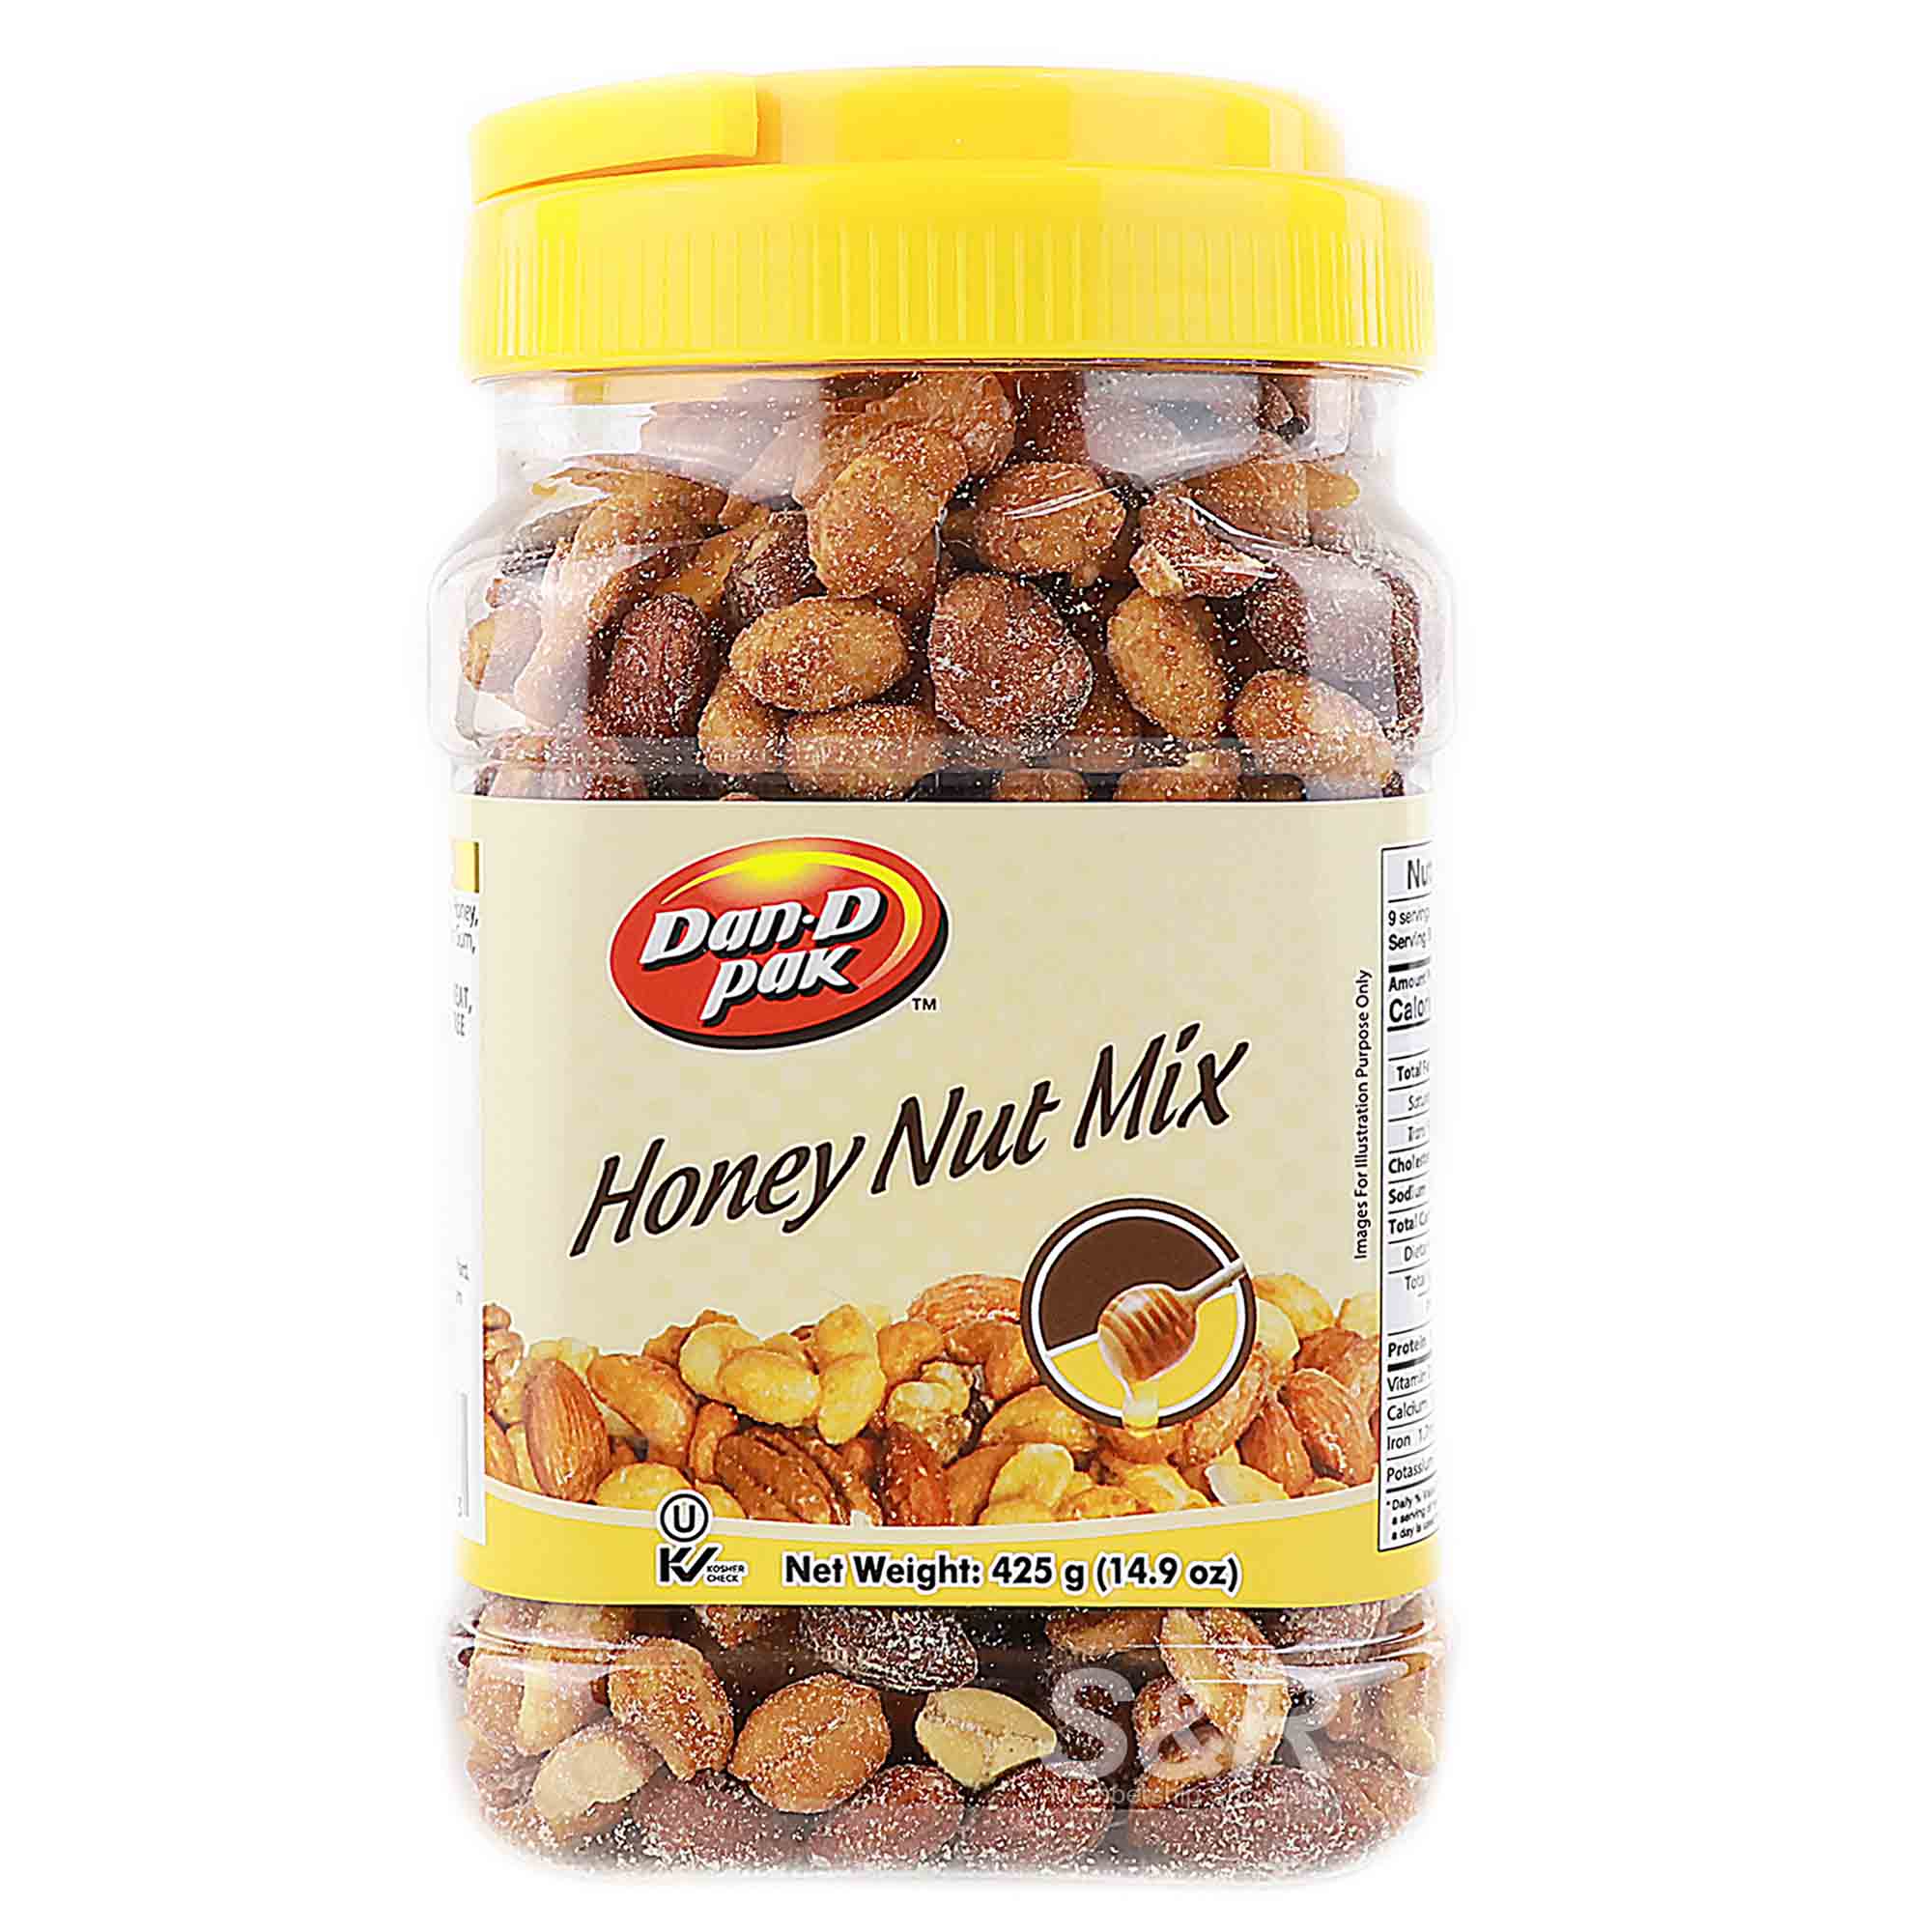 Dan-D Pak Honey Nut Mix 425g